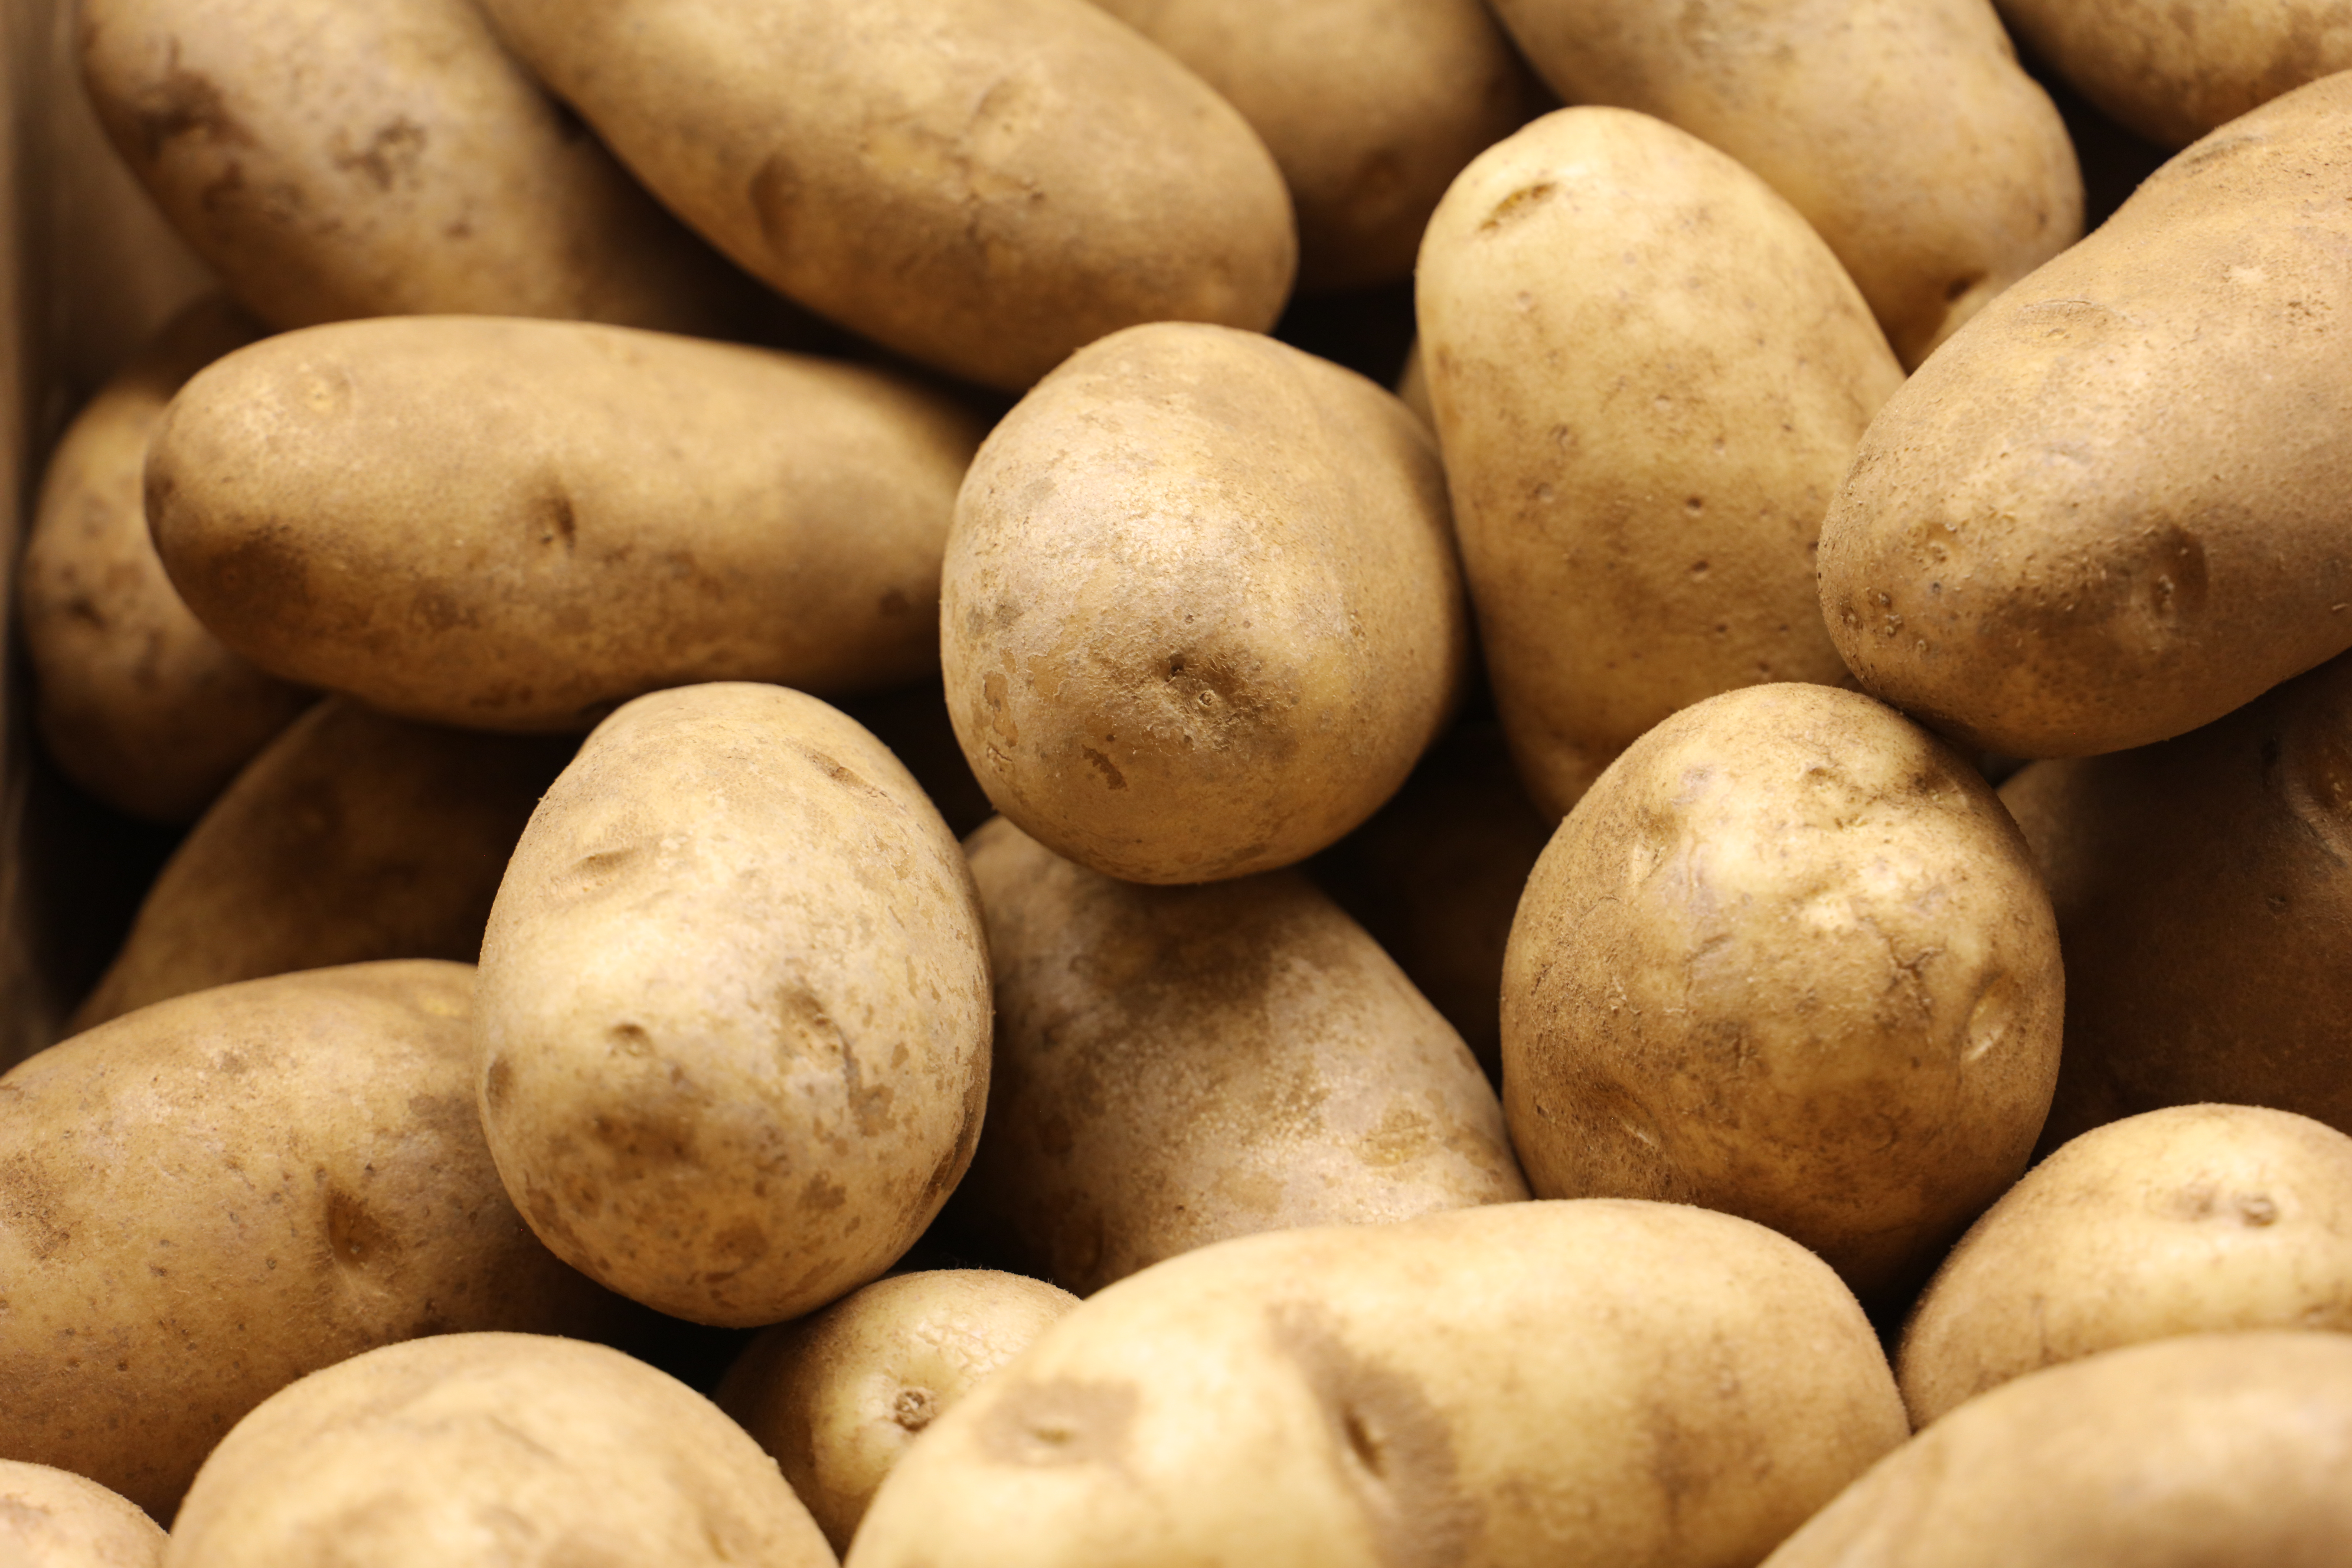 U.S. potato exports set record in 2017 | Packer